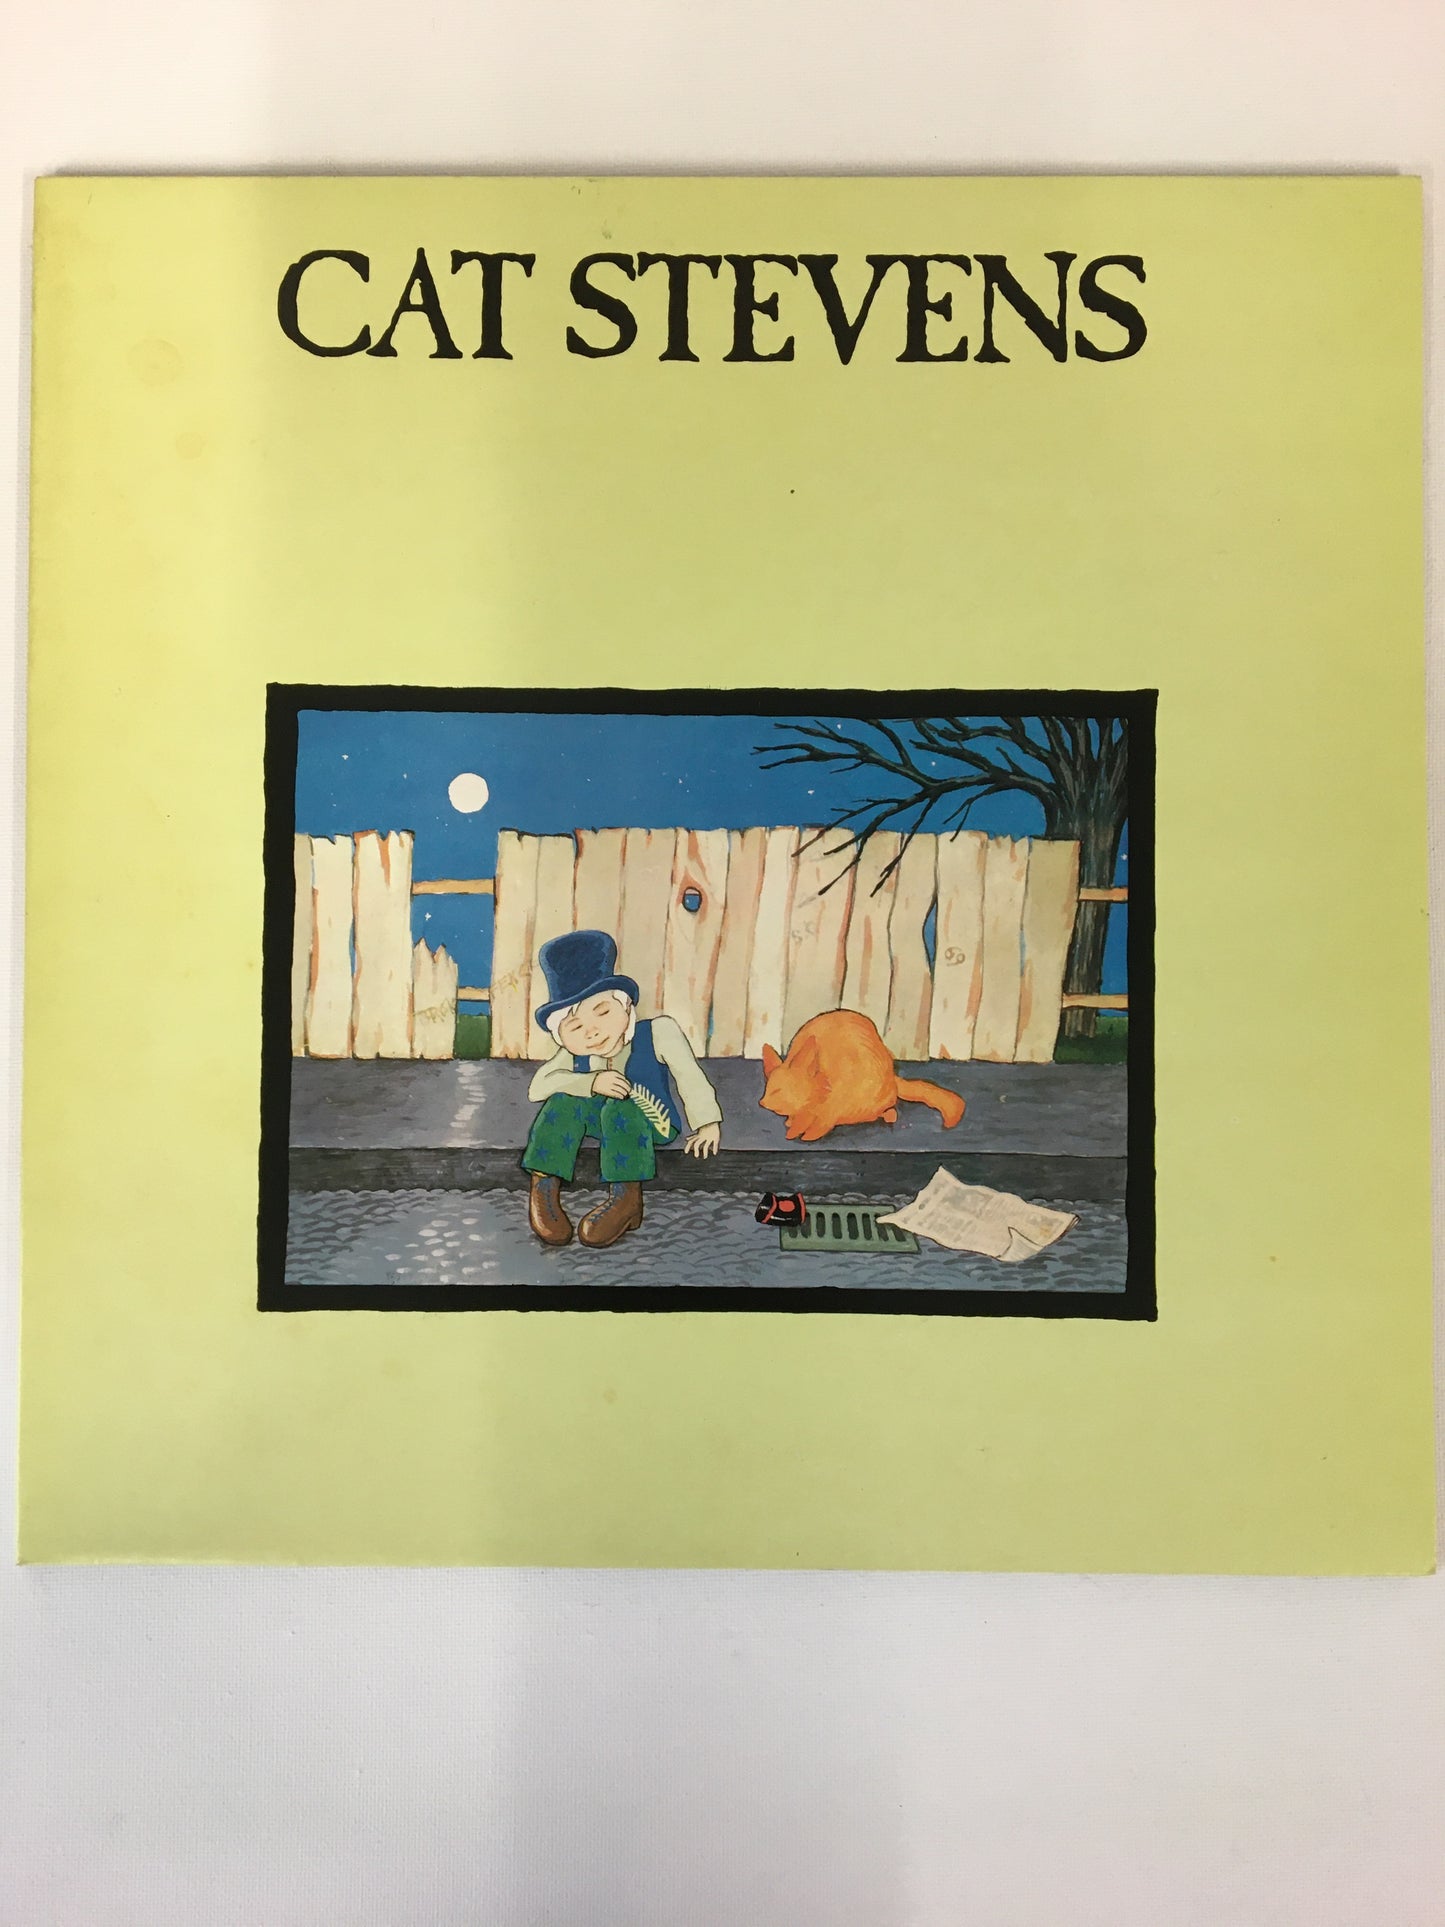 CAT STEVENS LP ; TEASER AND THE FIRECAT